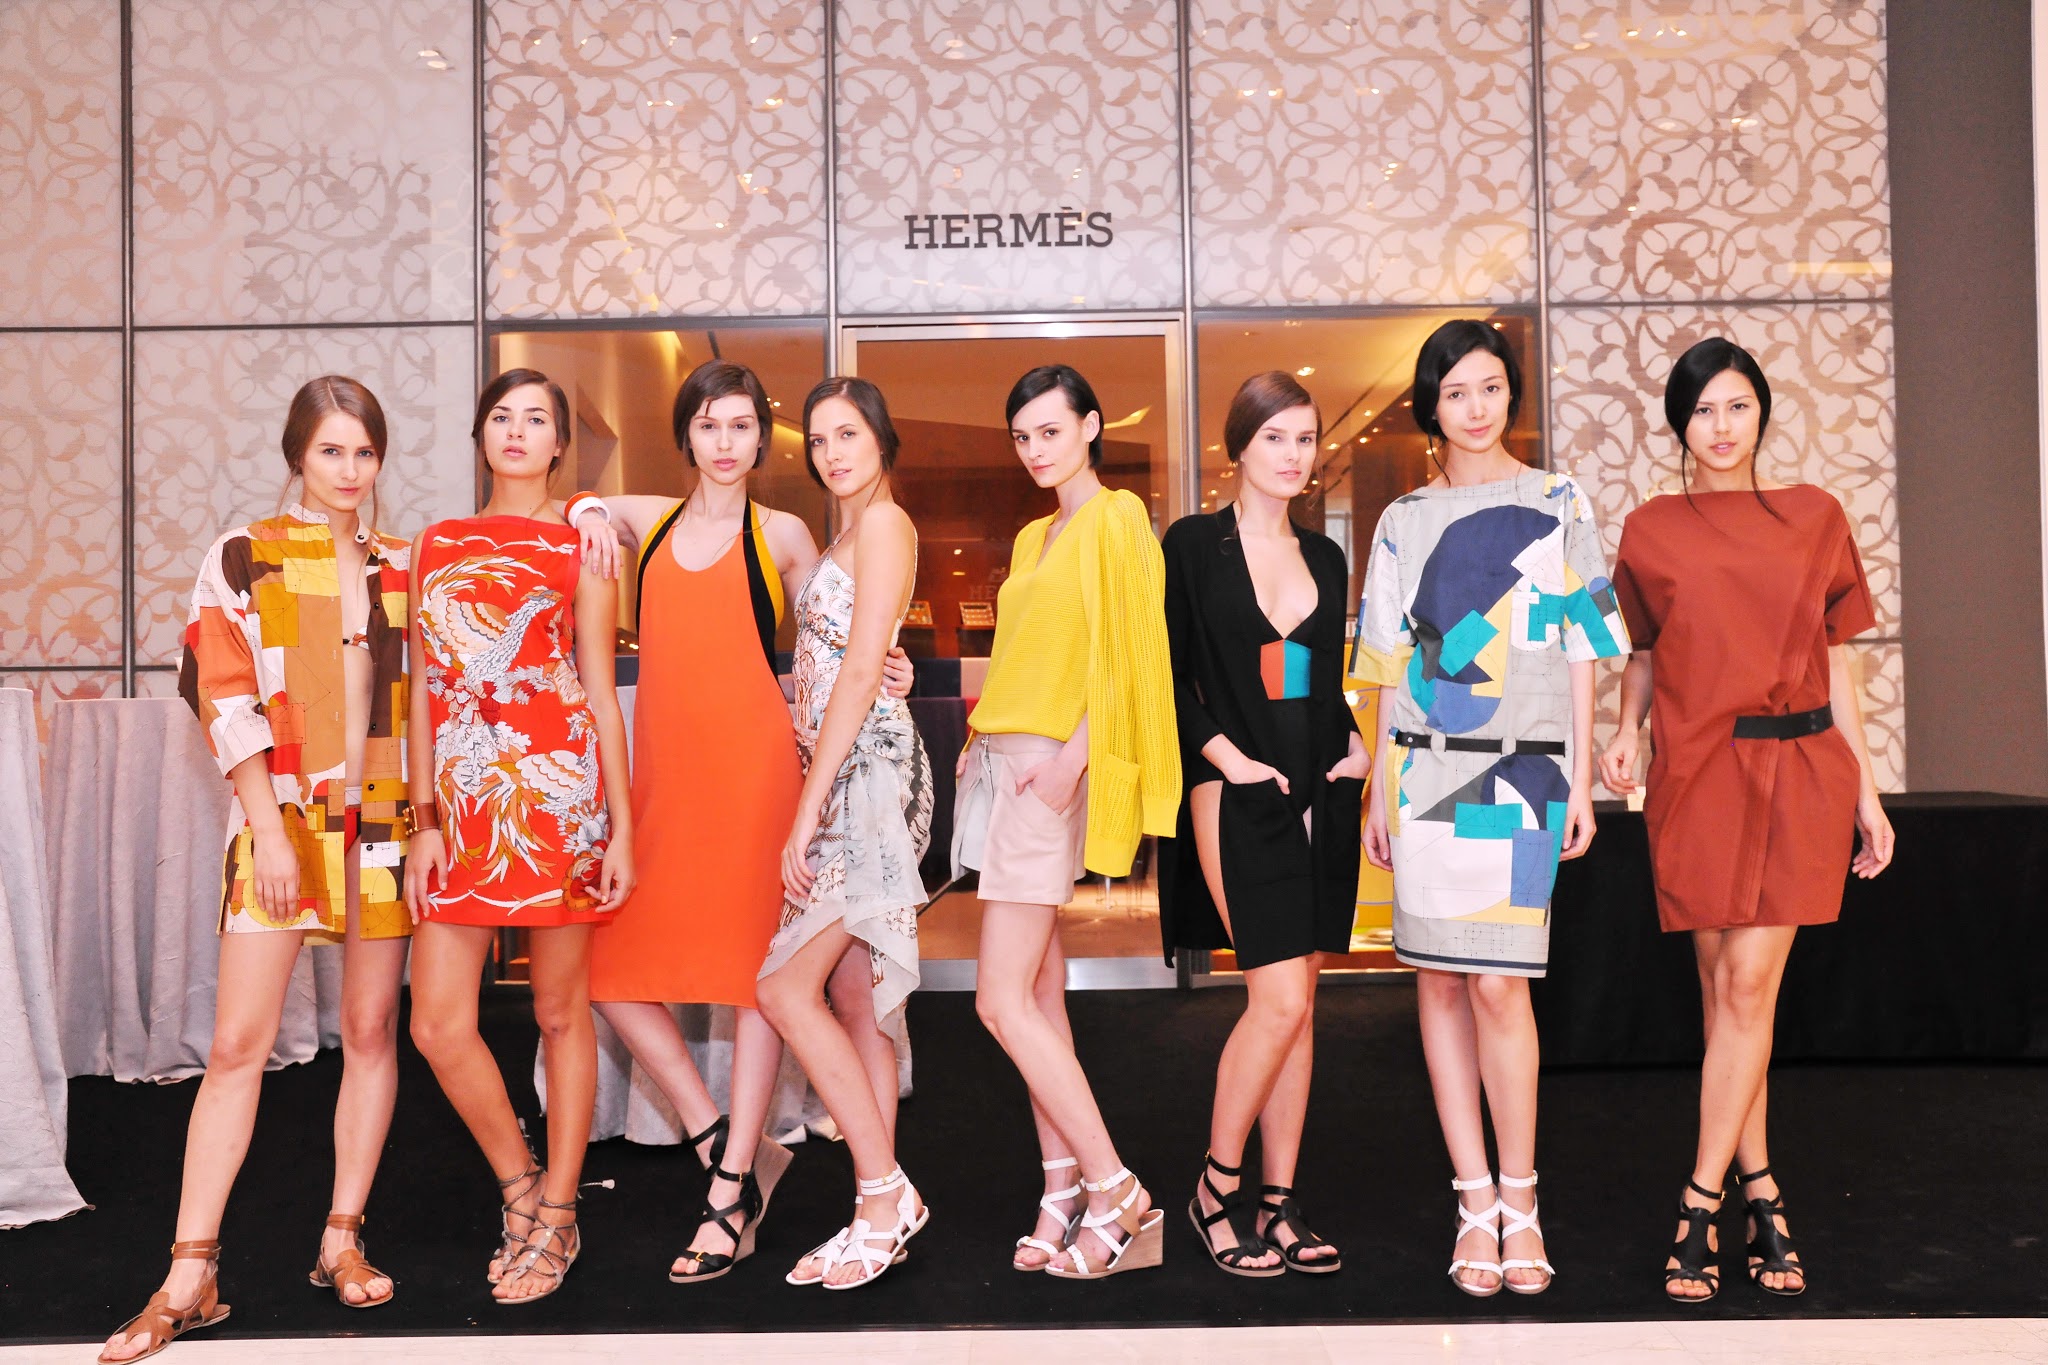 Event Post: Hermès Spring/Summer 2013 Press Preview